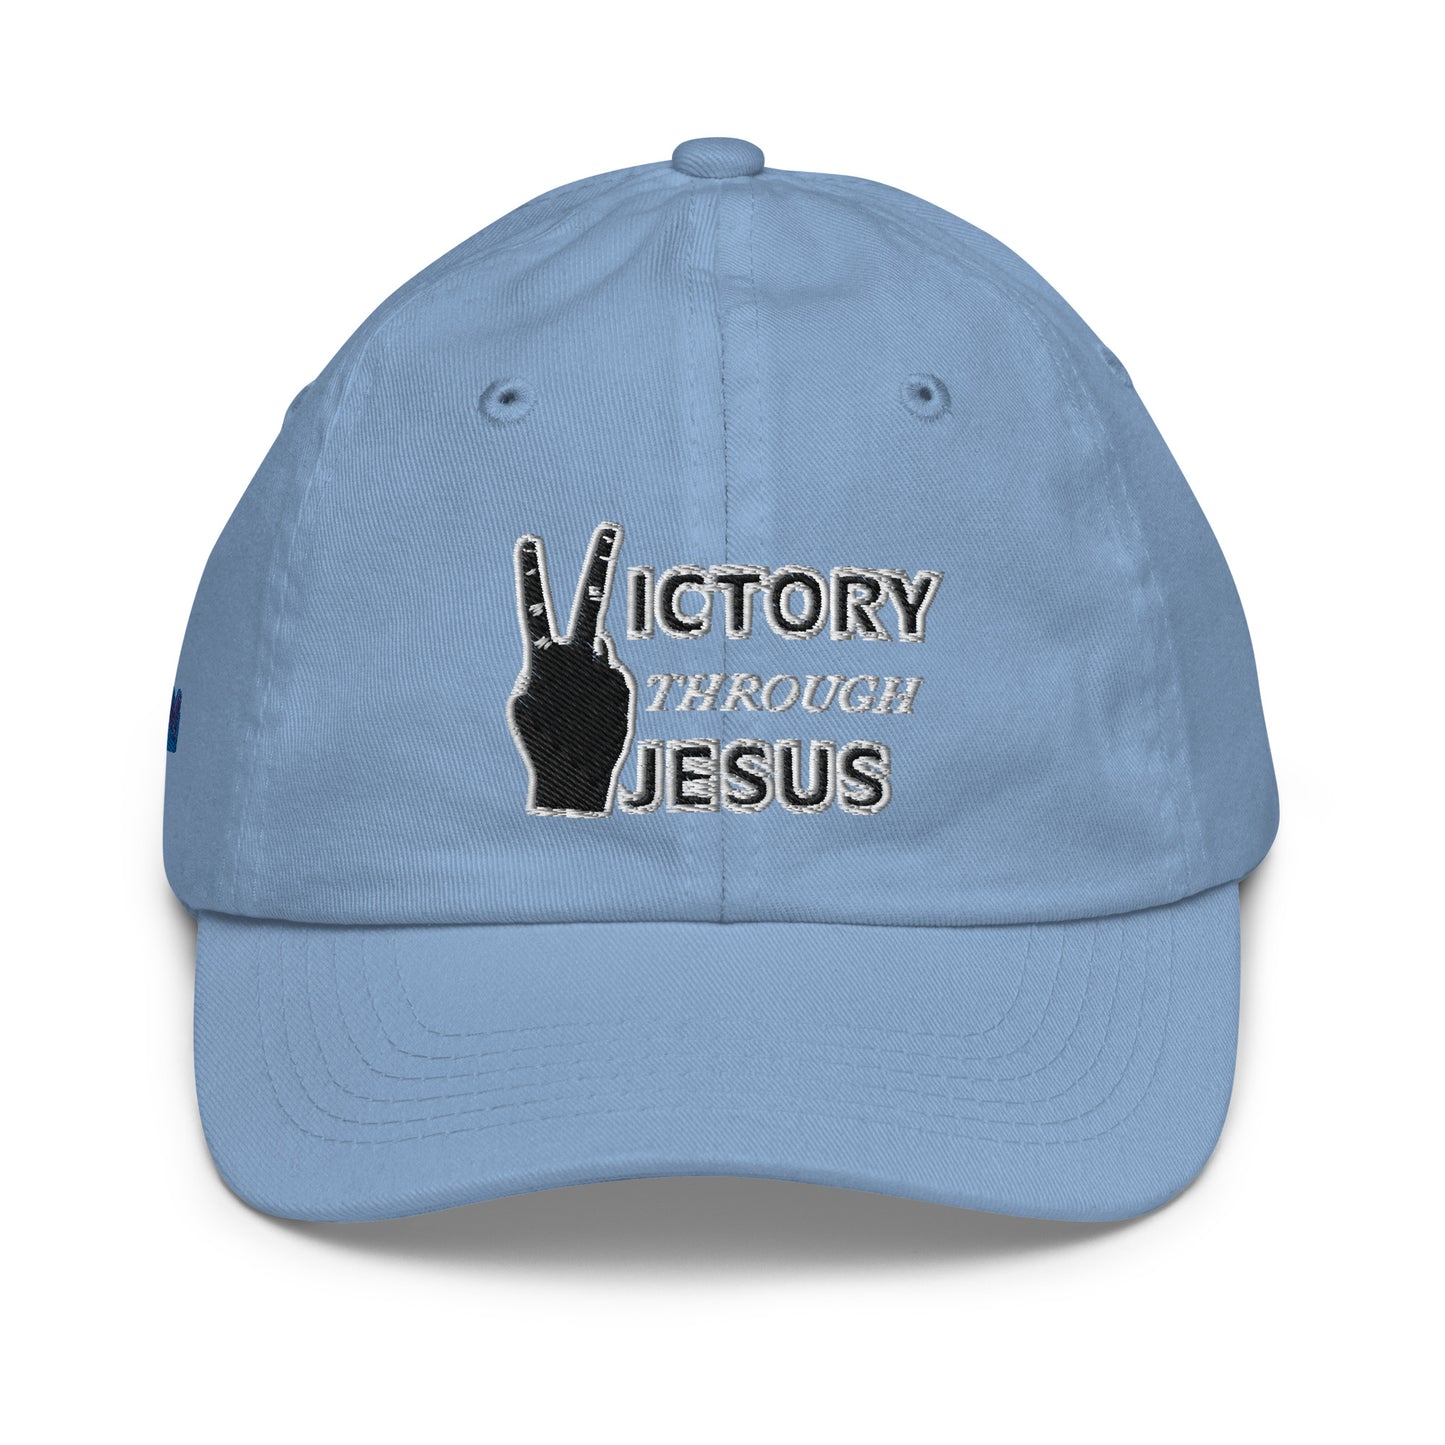 Victory Through Jesus Youth Baseball Cap